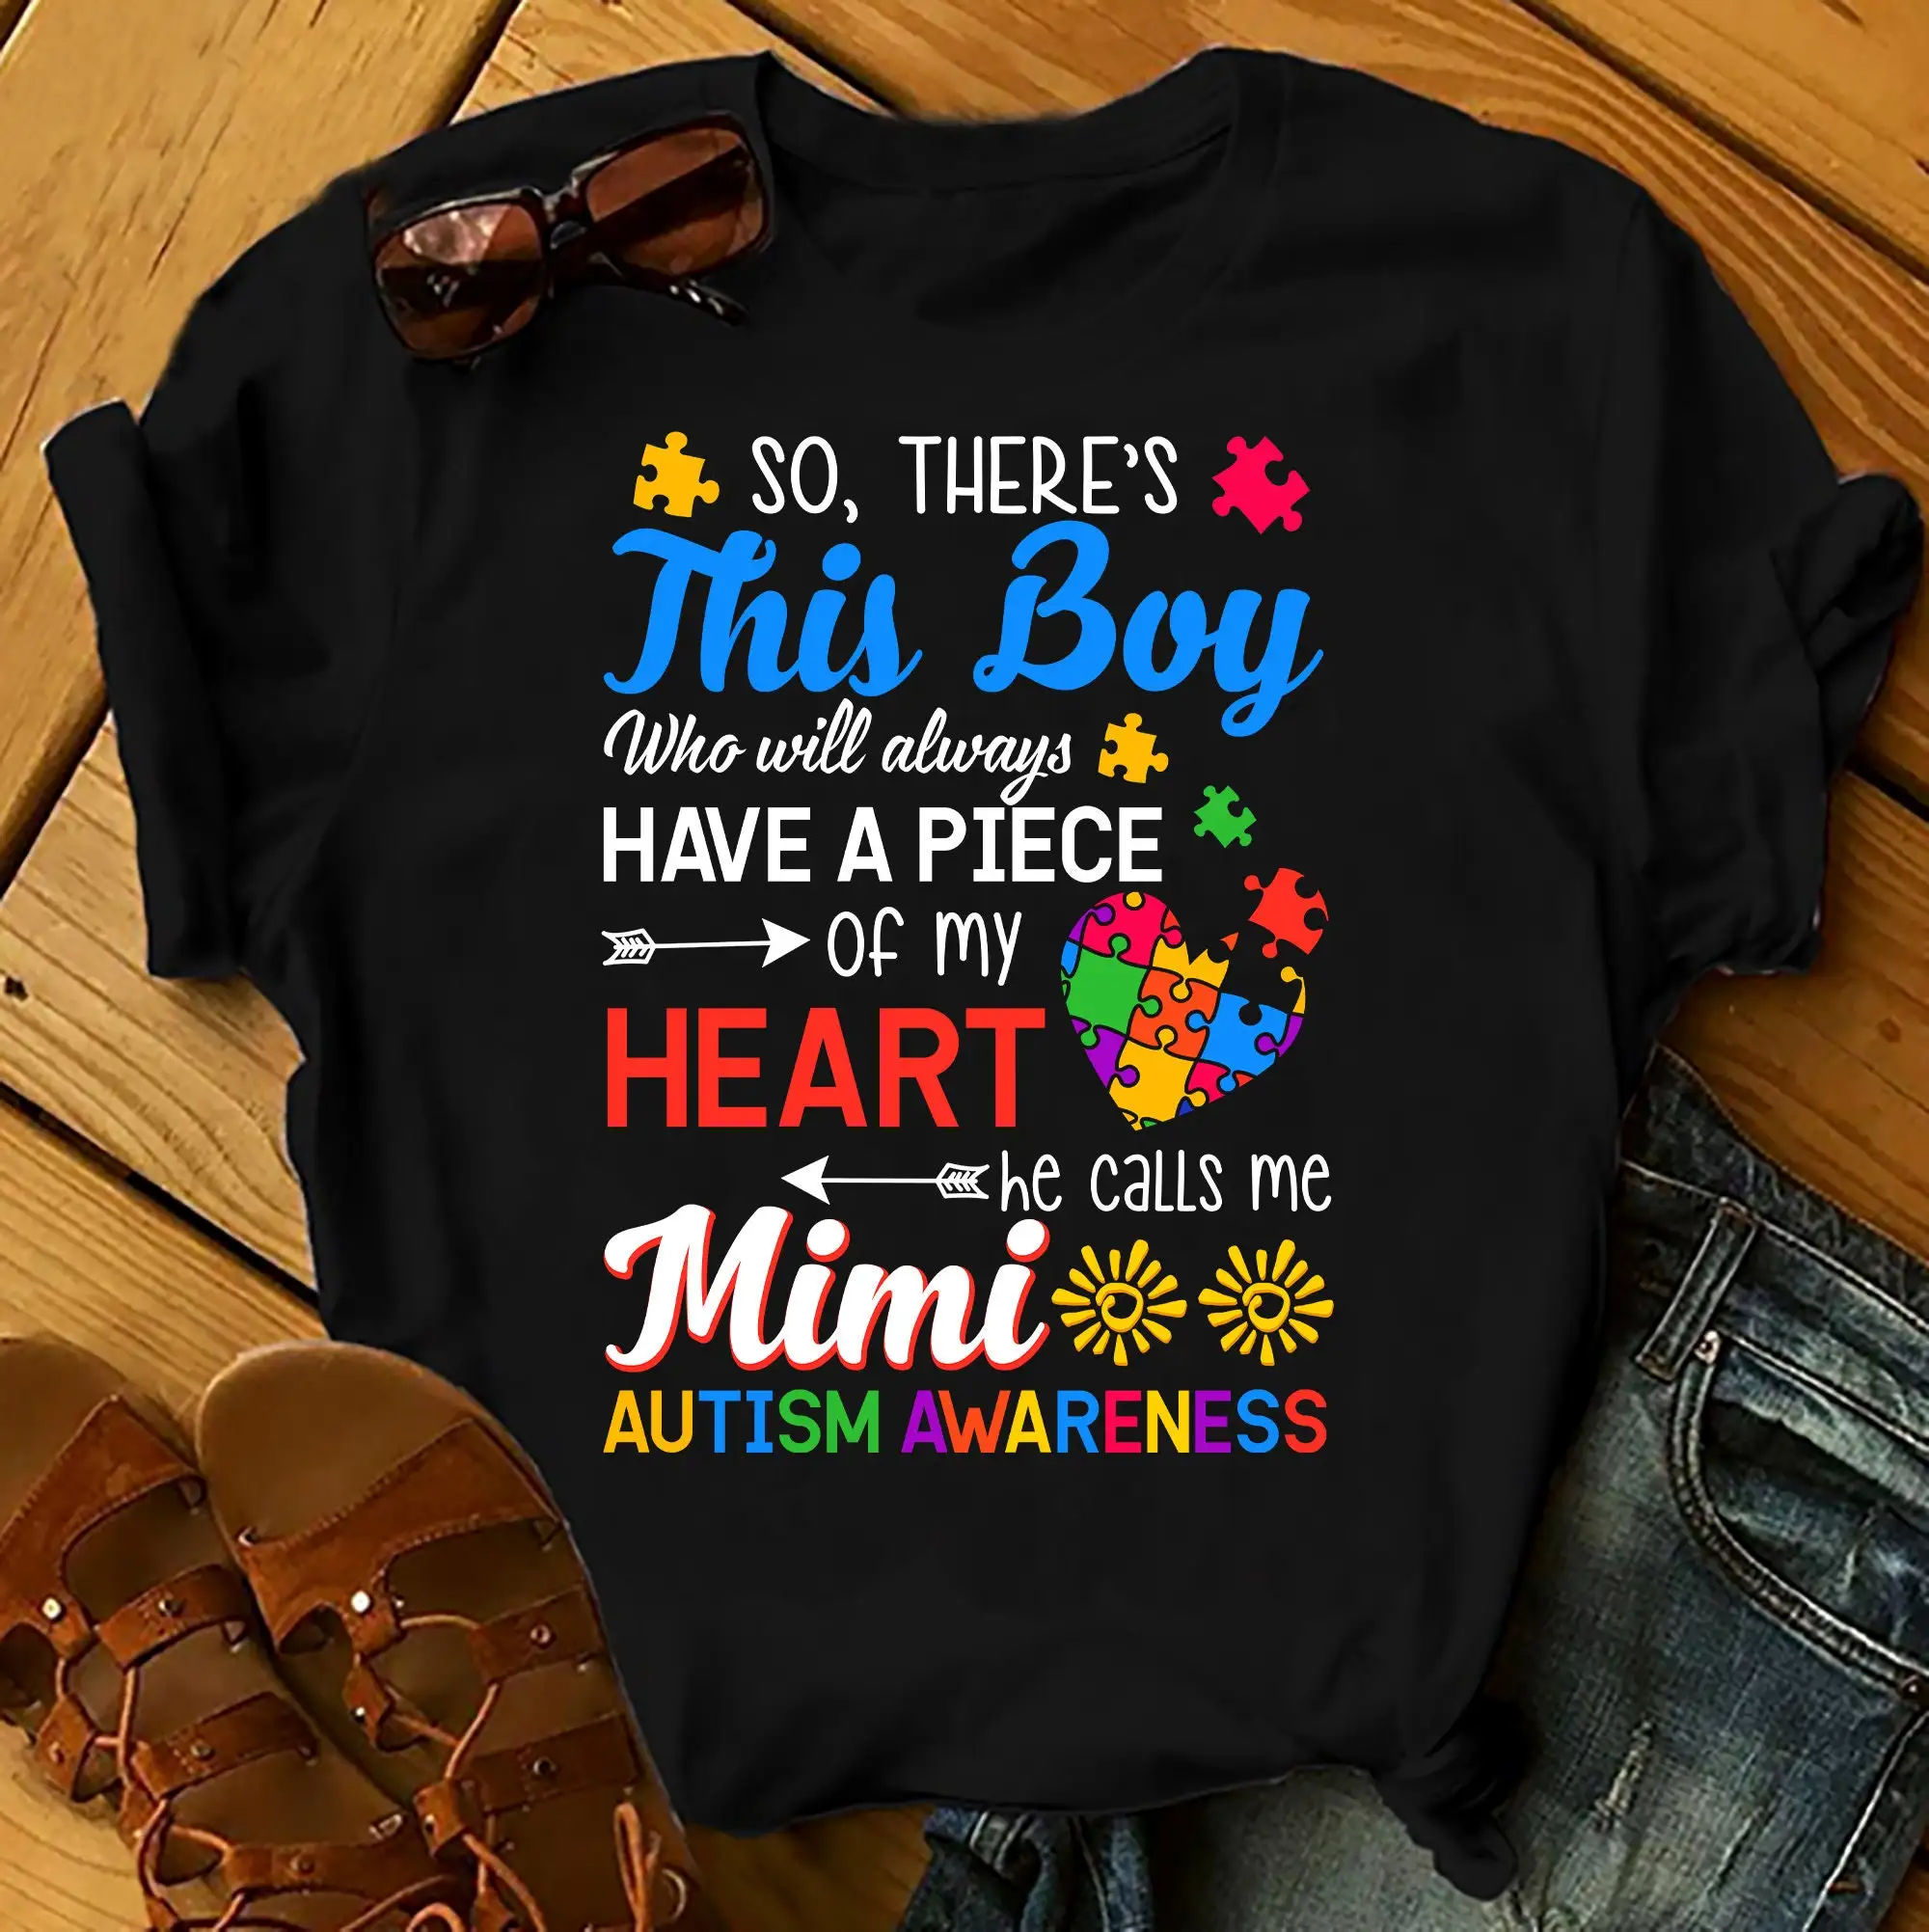 

Mimi Autism Awareness - Autism Awereness T-Shirts Men Woman Birthday T Shirts Summer Tops Beach T Shirts Xs-5Xl Custom Gift New